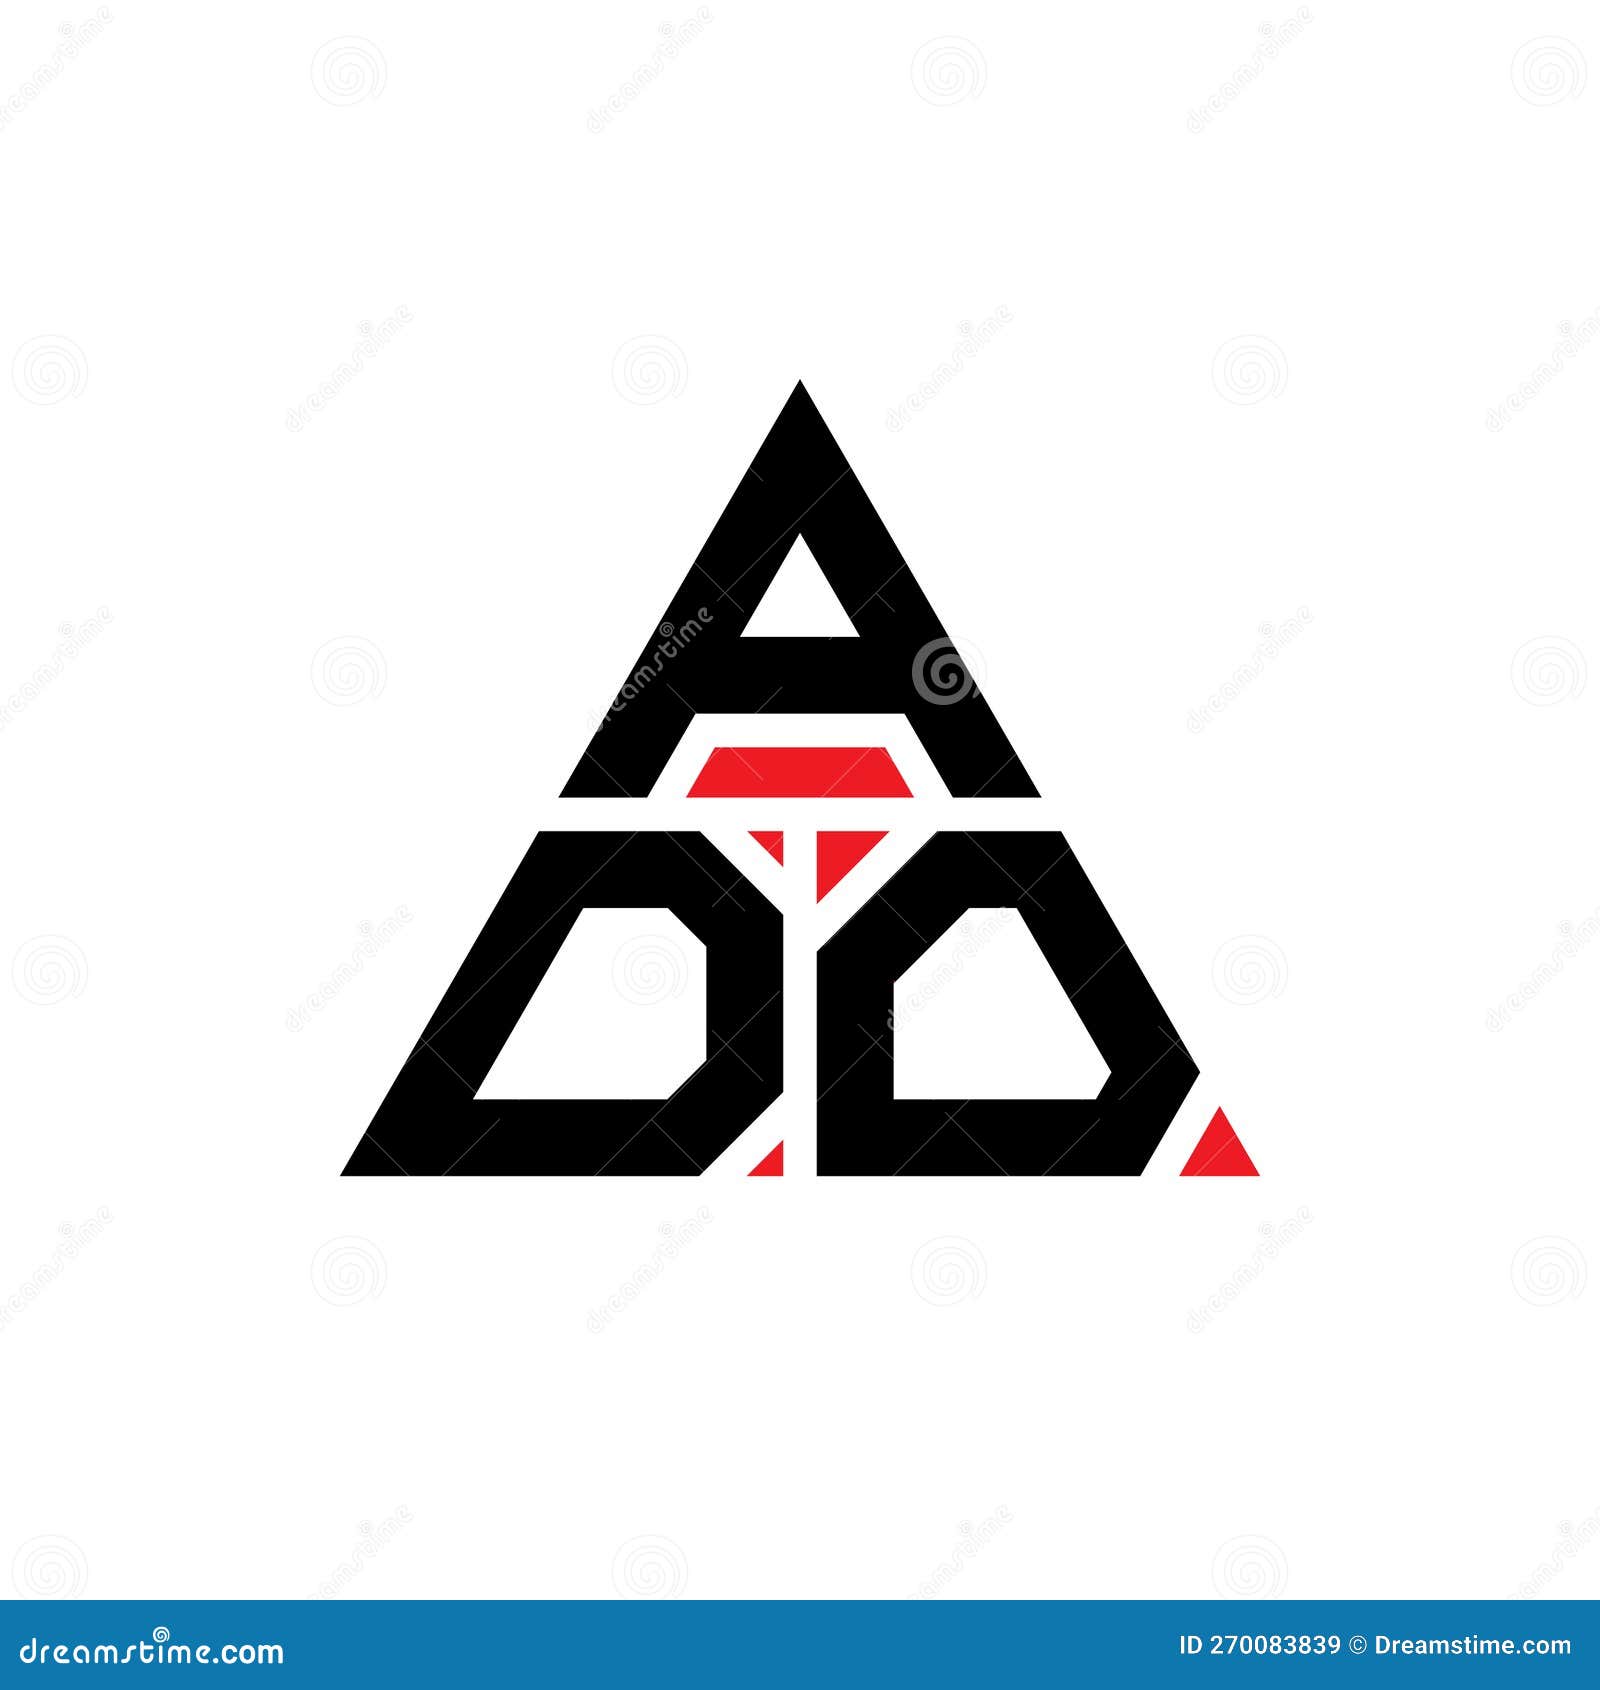 ado triangle letter logo  with triangle . ado triangle logo  monogram. ado triangle  logo template with red